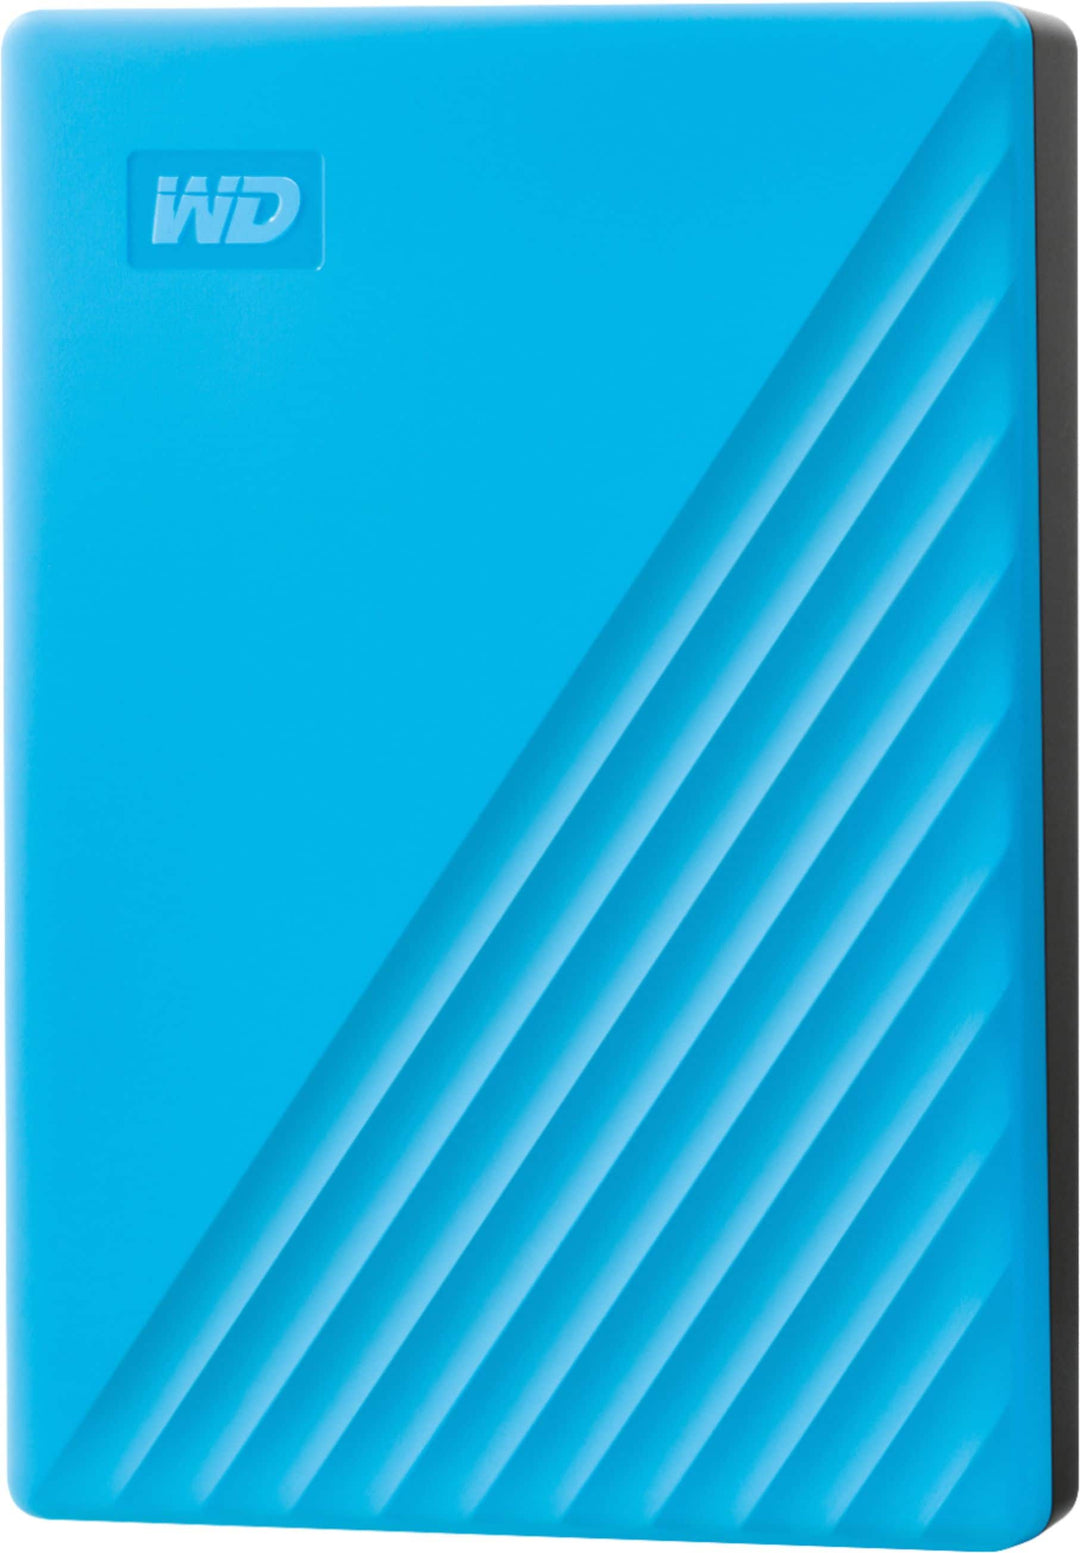 WD - My Passport 4TB External USB 3.0 Portable Hard Drive - Blue_0